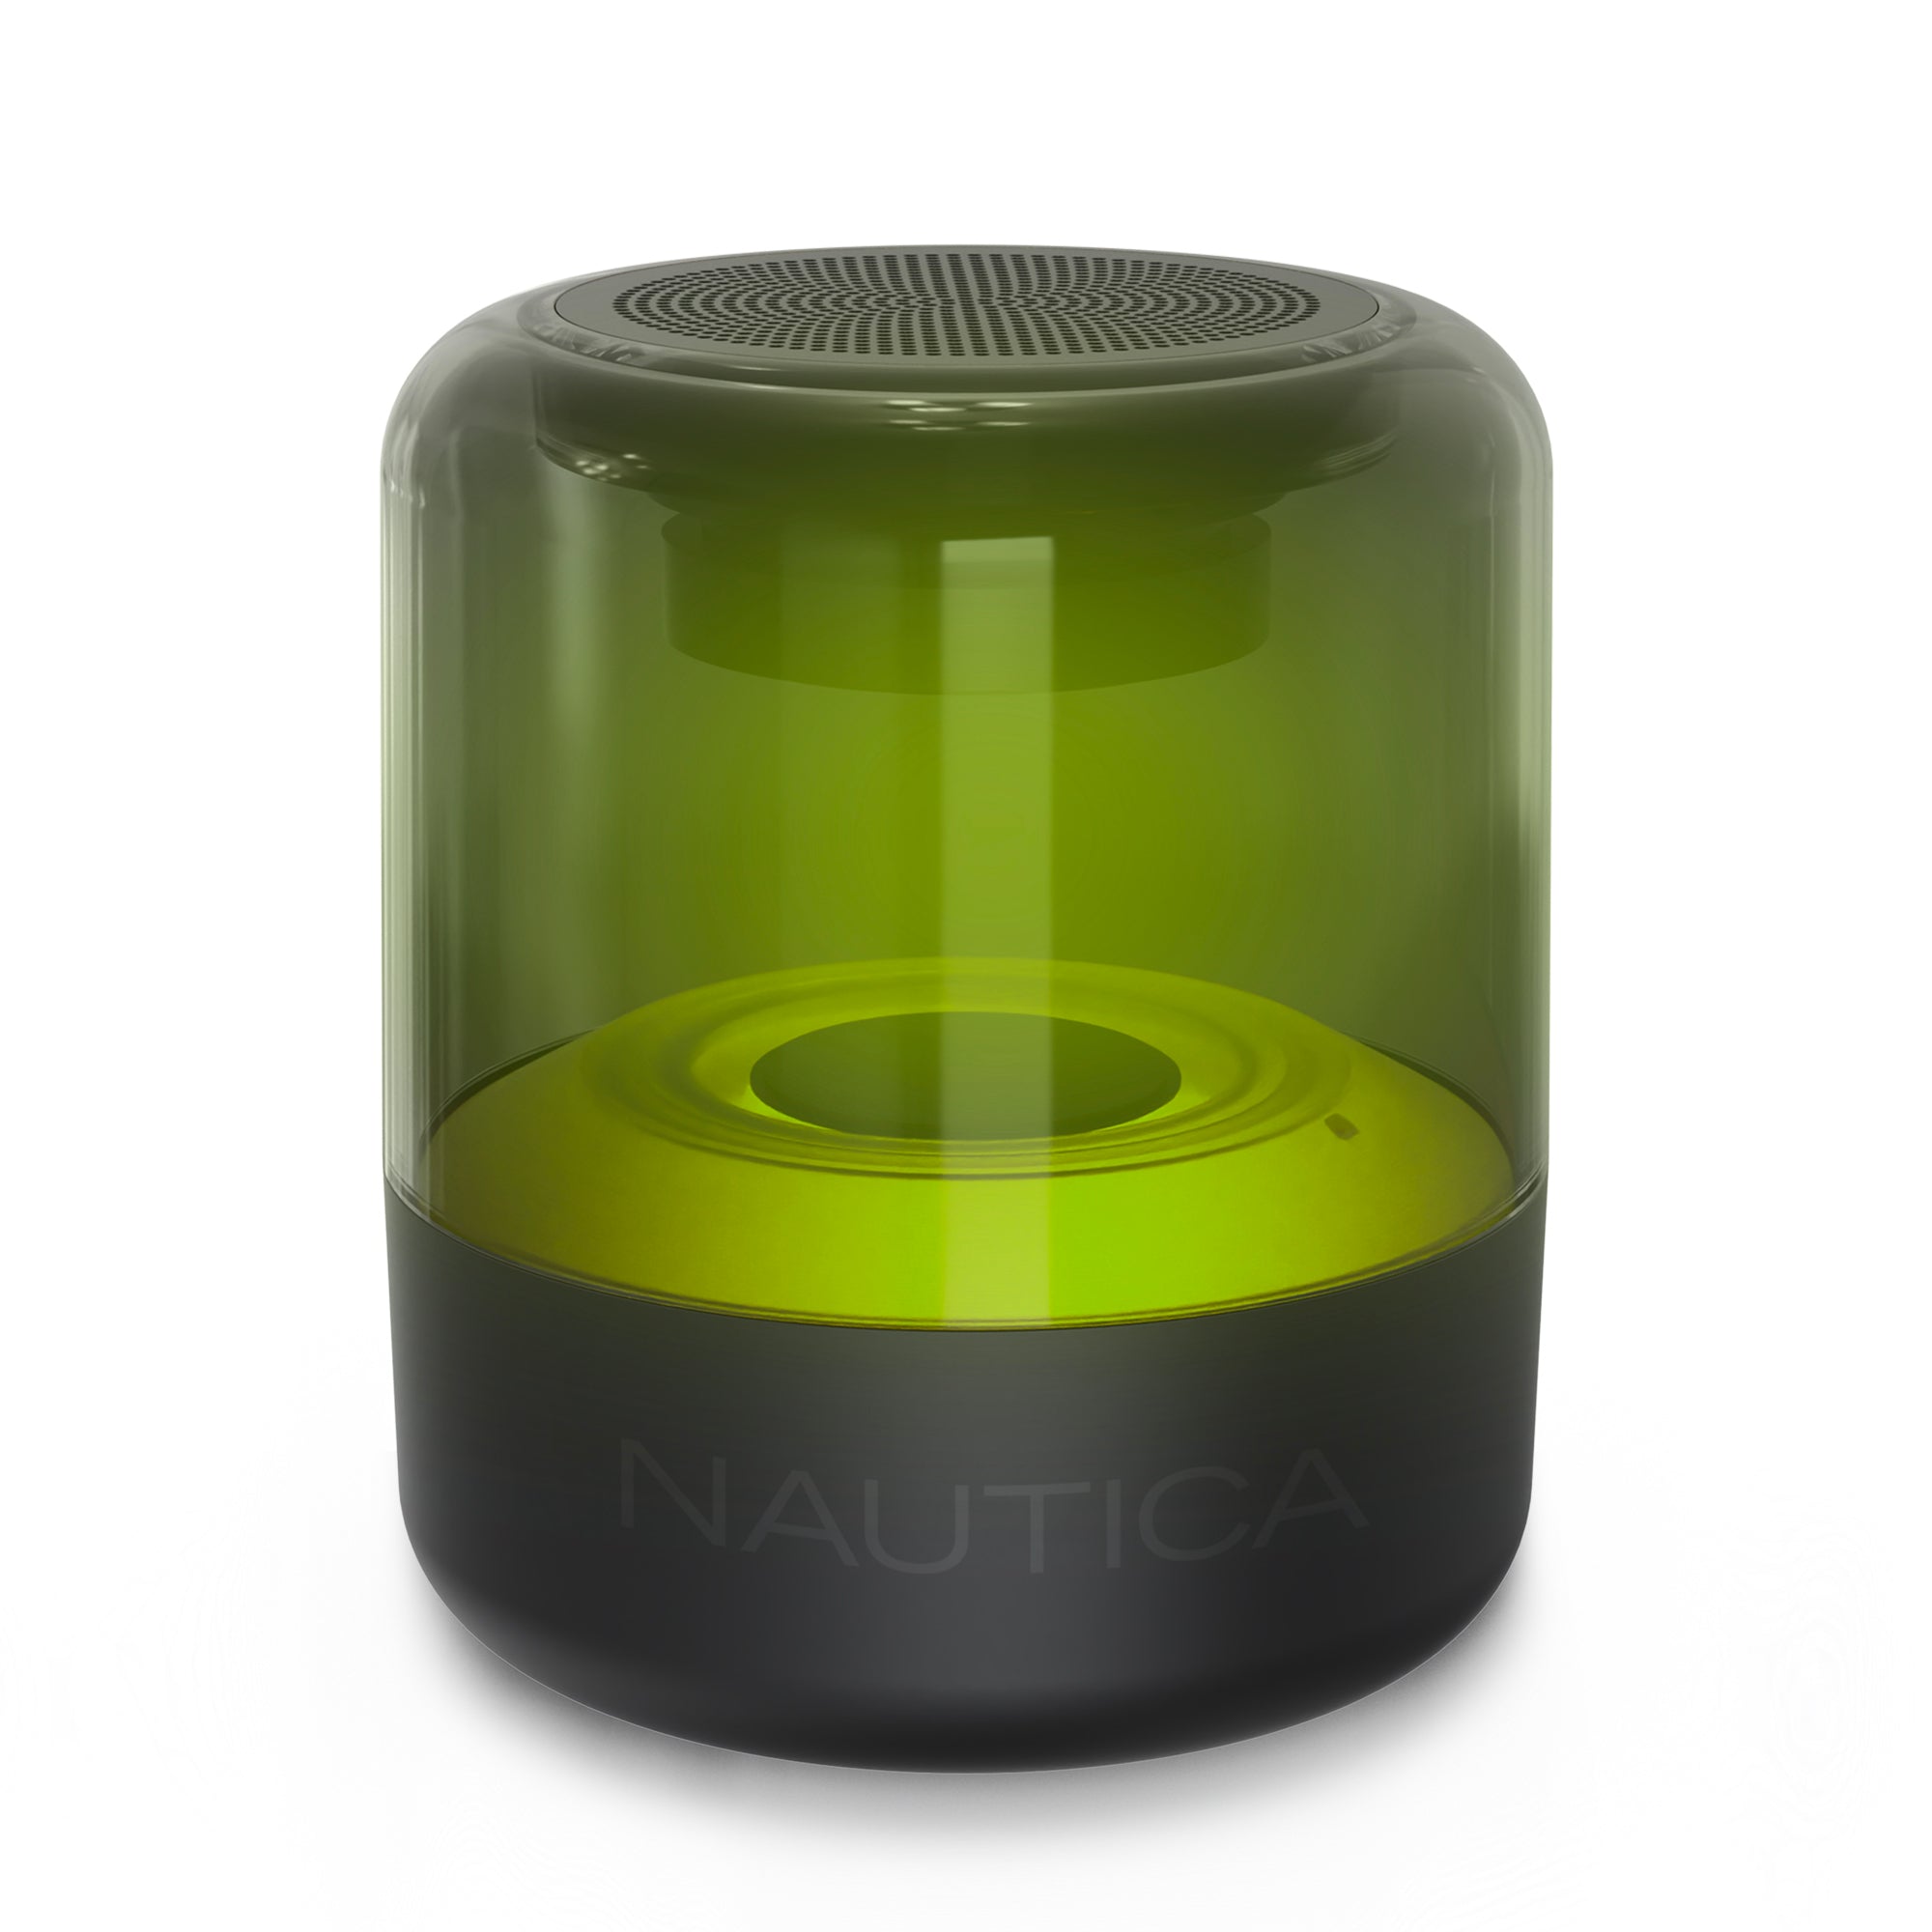 Haut-parleur Bluetooth portable Nautica S50 S50